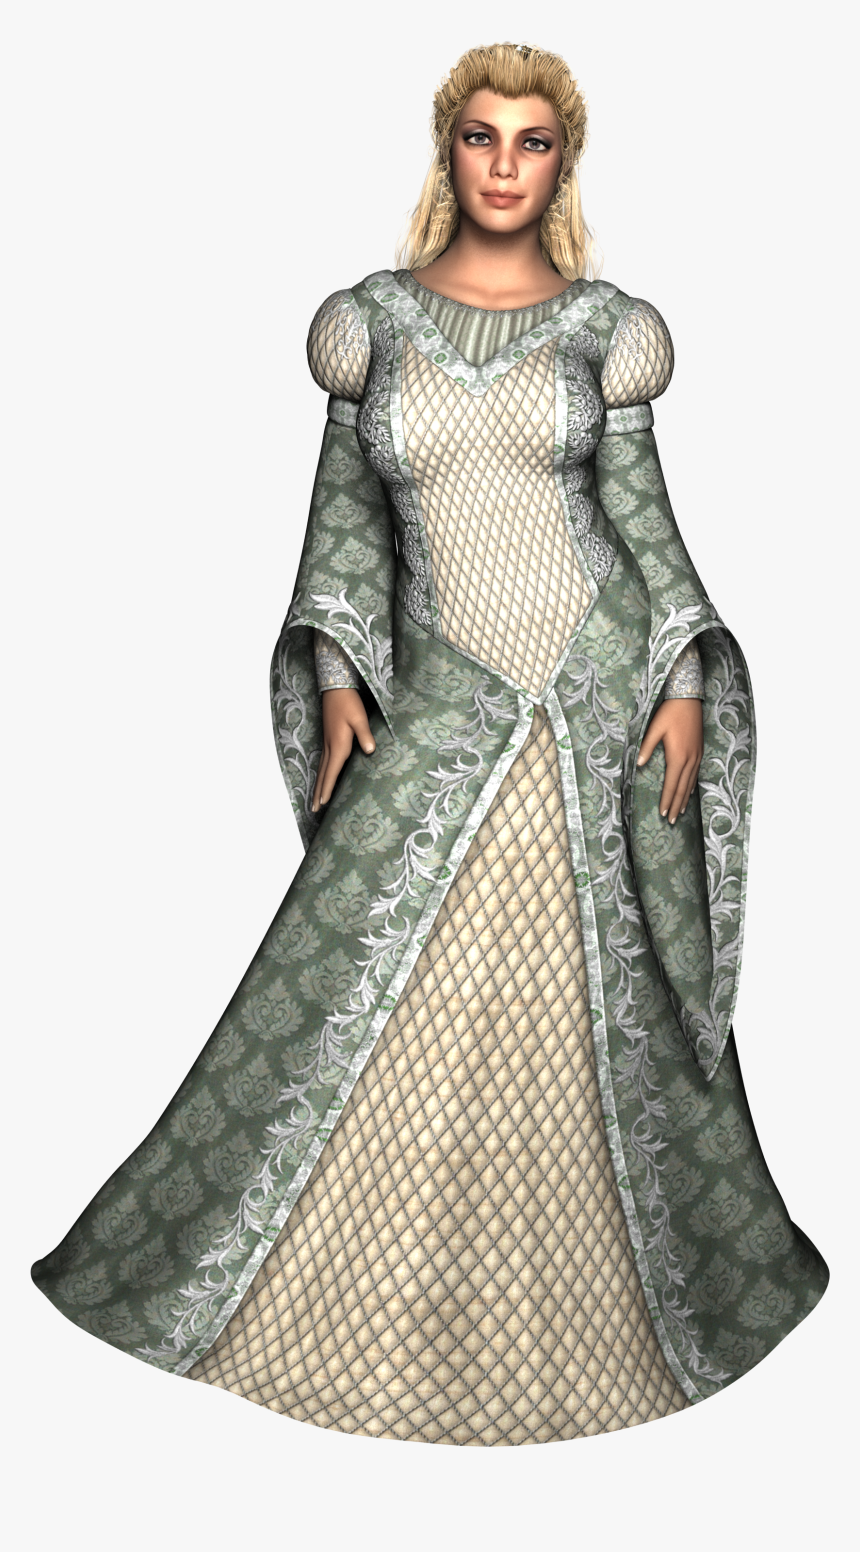 Lady Woman Gown Female Girl - Ambiorix